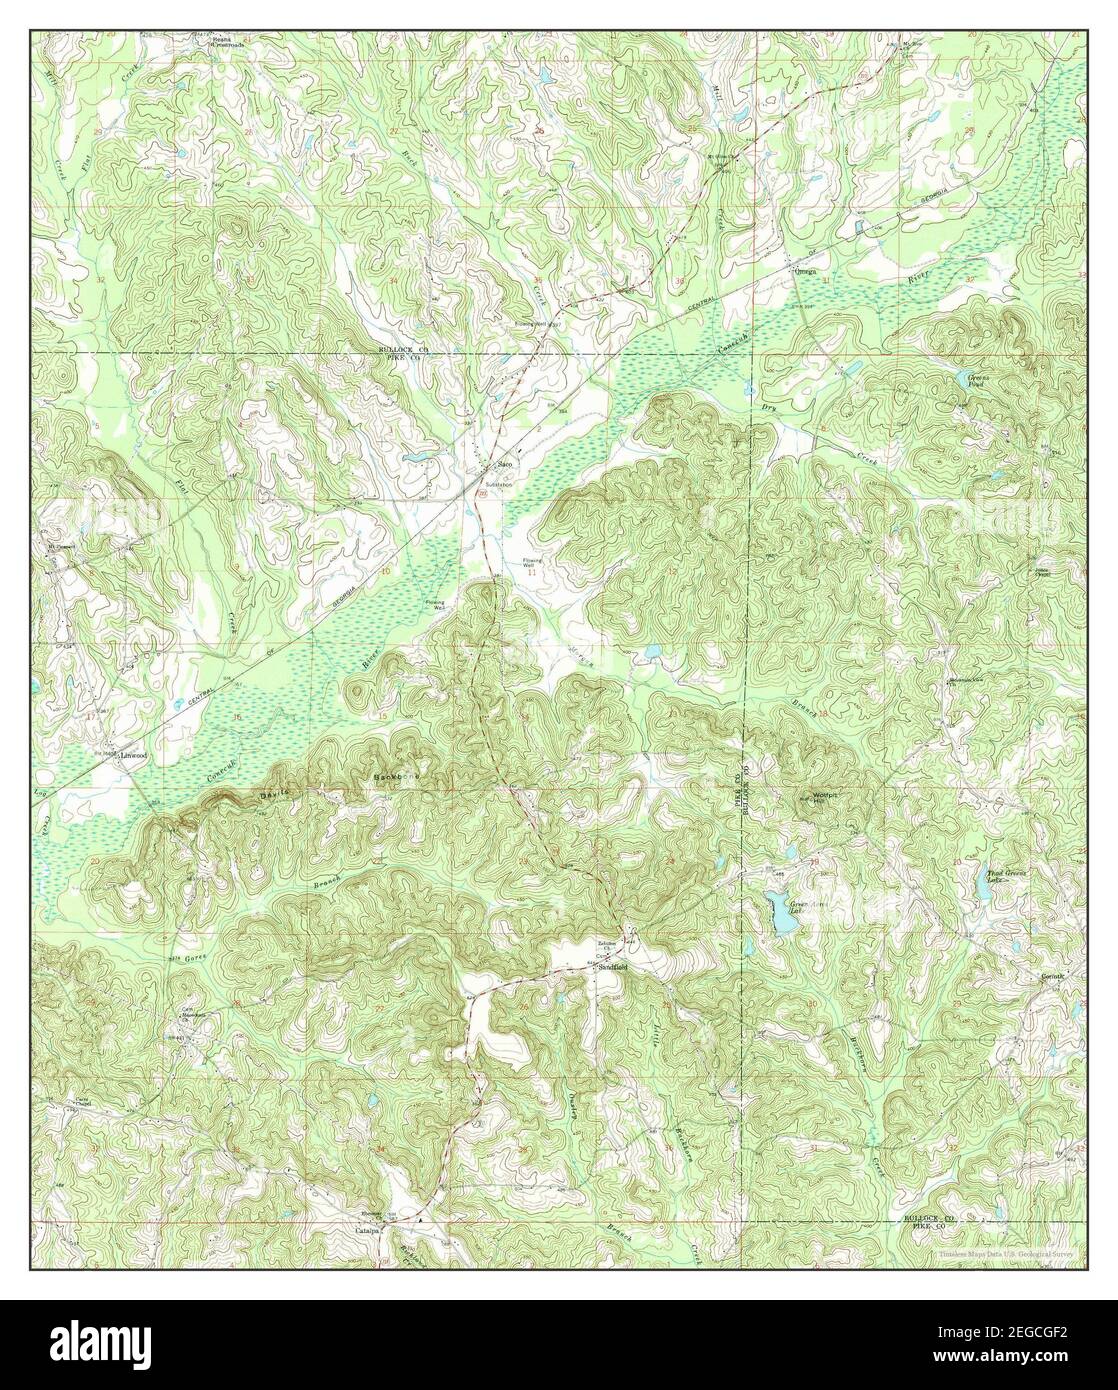 Saco, Alabama, map 1968, 1:24000, United States of America by Timeless Maps, data U.S. Geological Survey Stock Photo